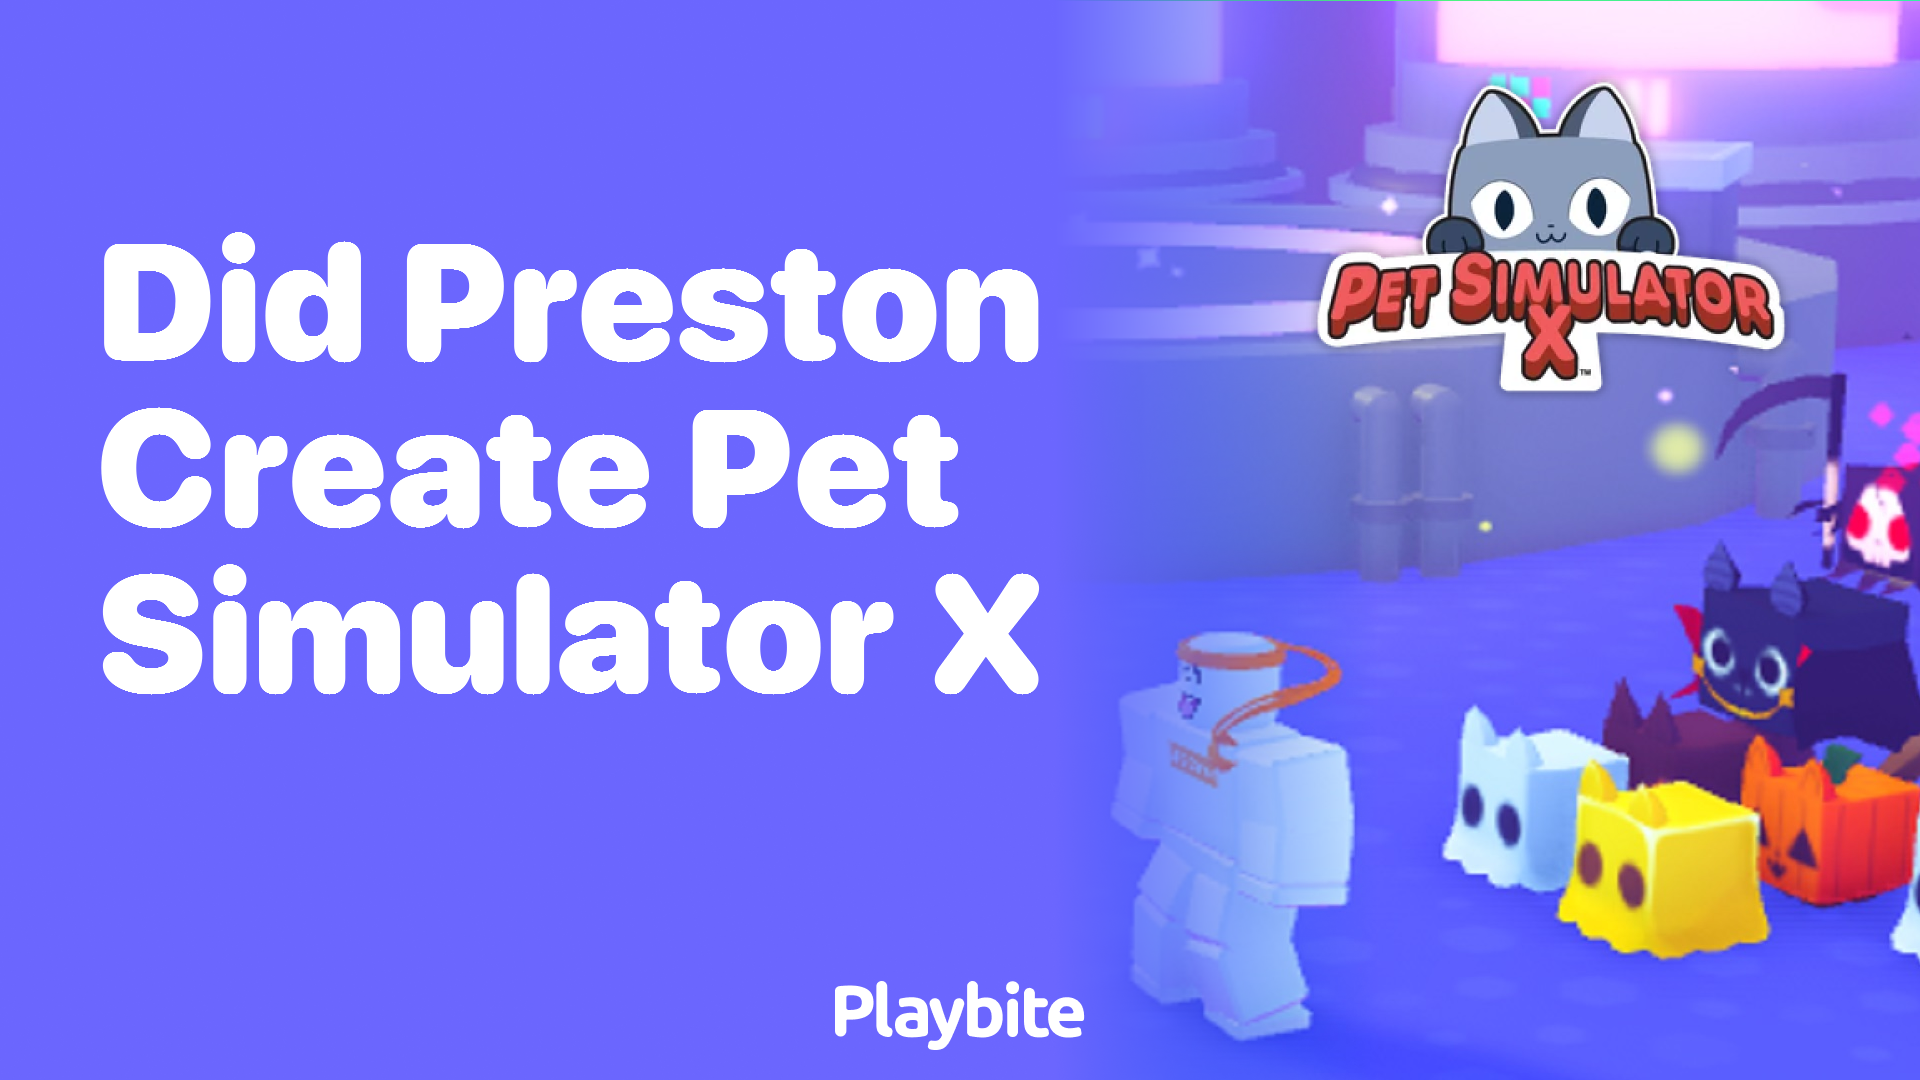 Did Preston Create Pet Simulator X?